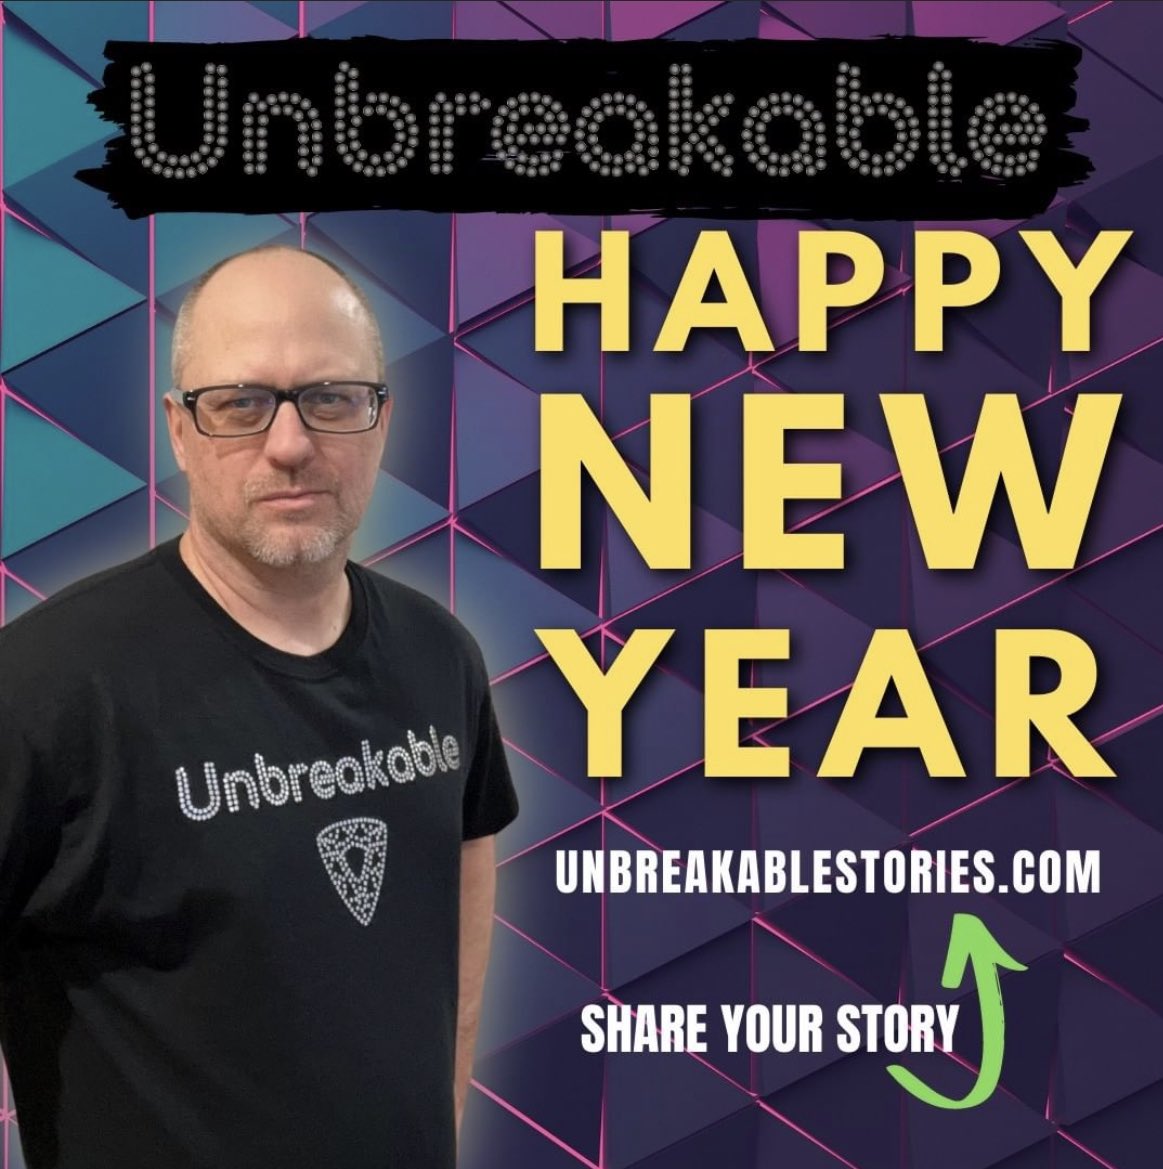 Wishing everyone a wonderful new year. unbreakablestories.com

@unbreakableclub @PoshNotions @EvanCarmichael 

#NewYear2022 #NewYear #HappyNewYear #myunbreakablestory #unbreakable